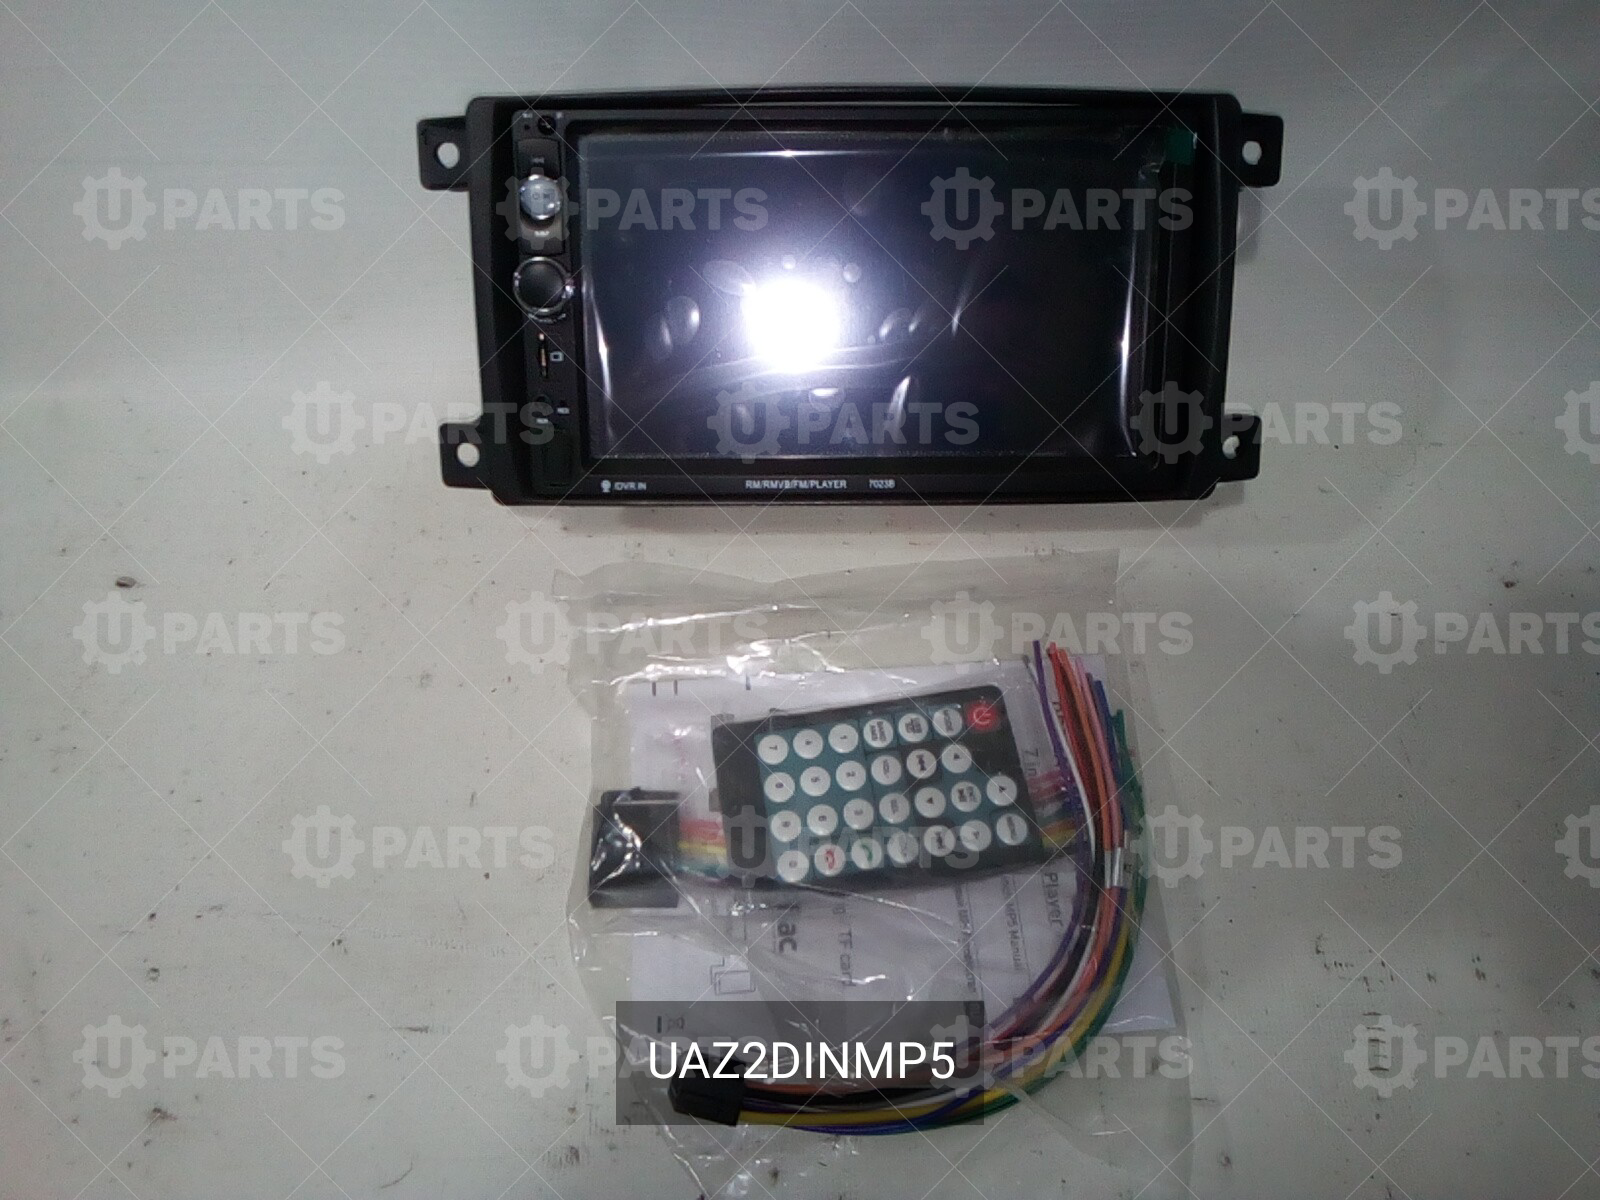 Автомагнитола 2DIN MP3 для УАЗ Патриот (МР5)  | UAZ2DINMP5. Под заказ.